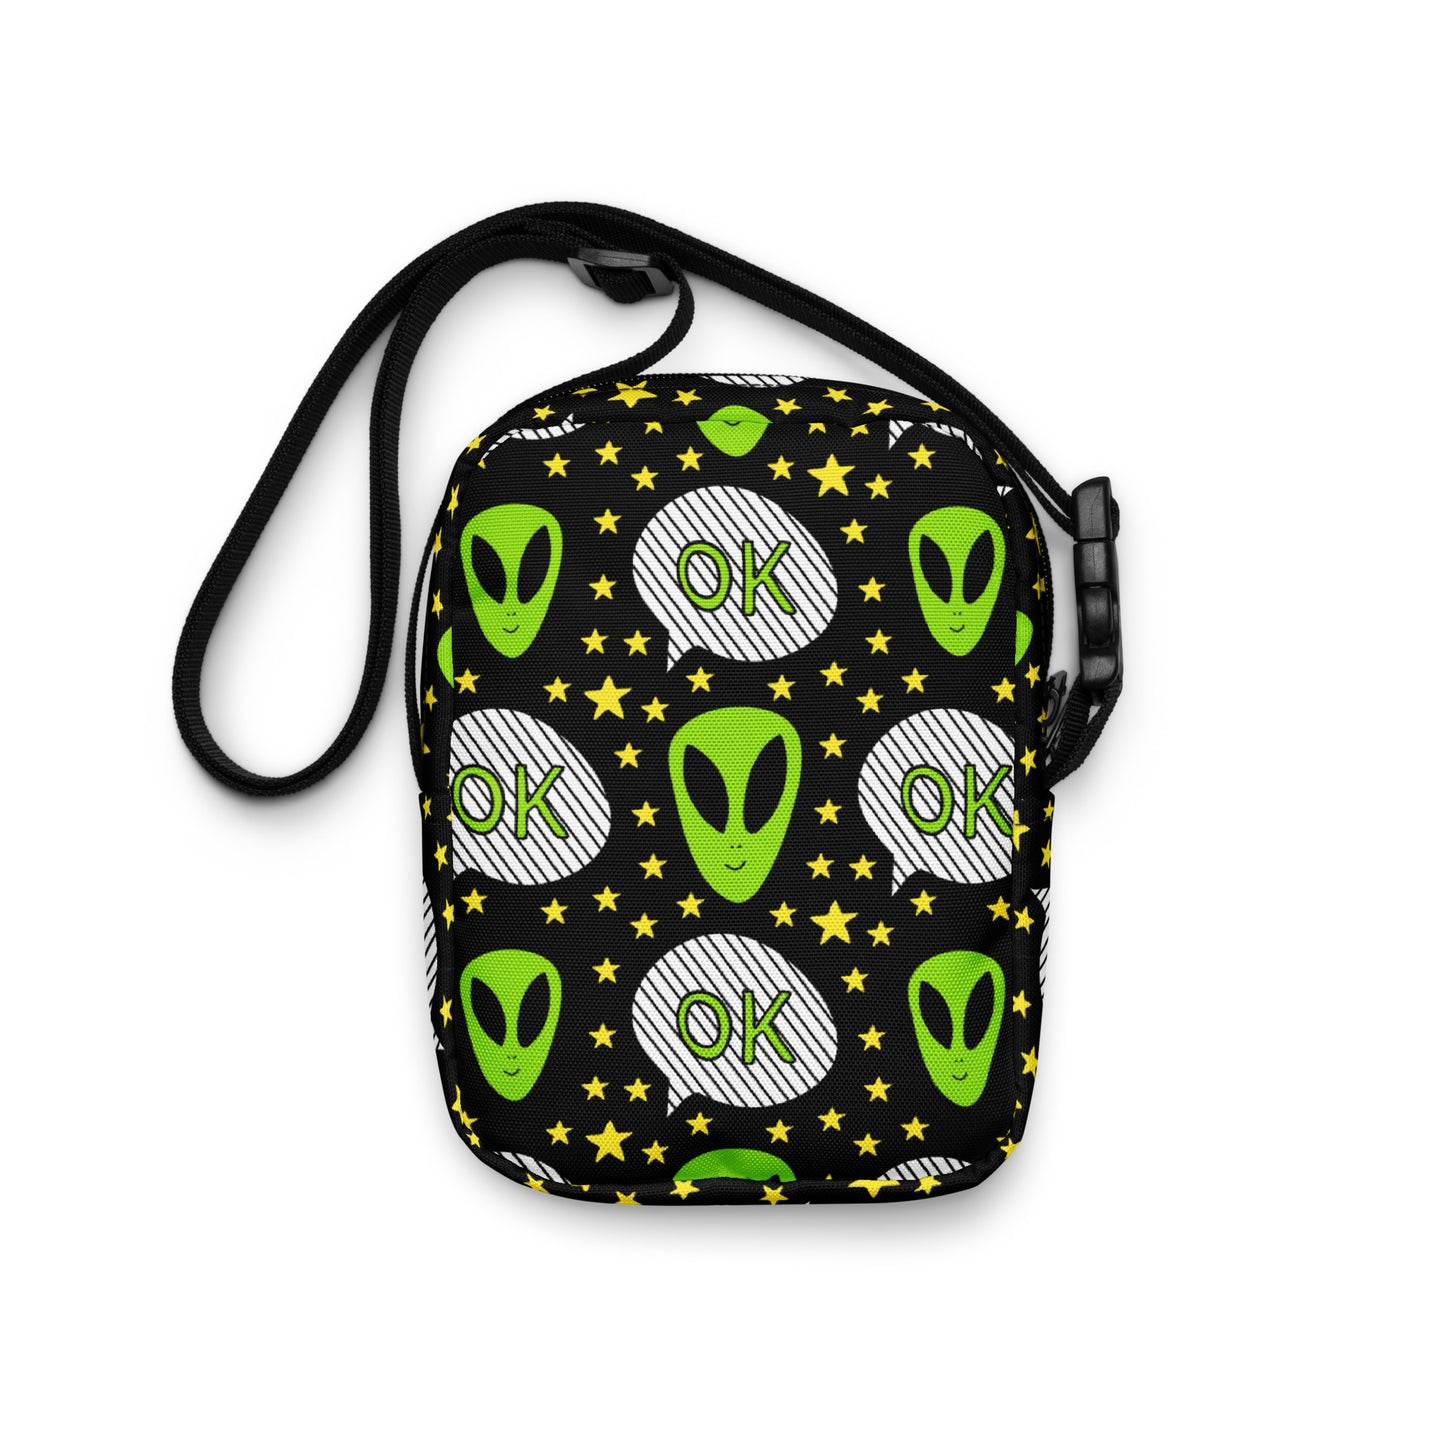 Alien OK - Utility crossbody bag Utility Cross Body Bag Sci Fi